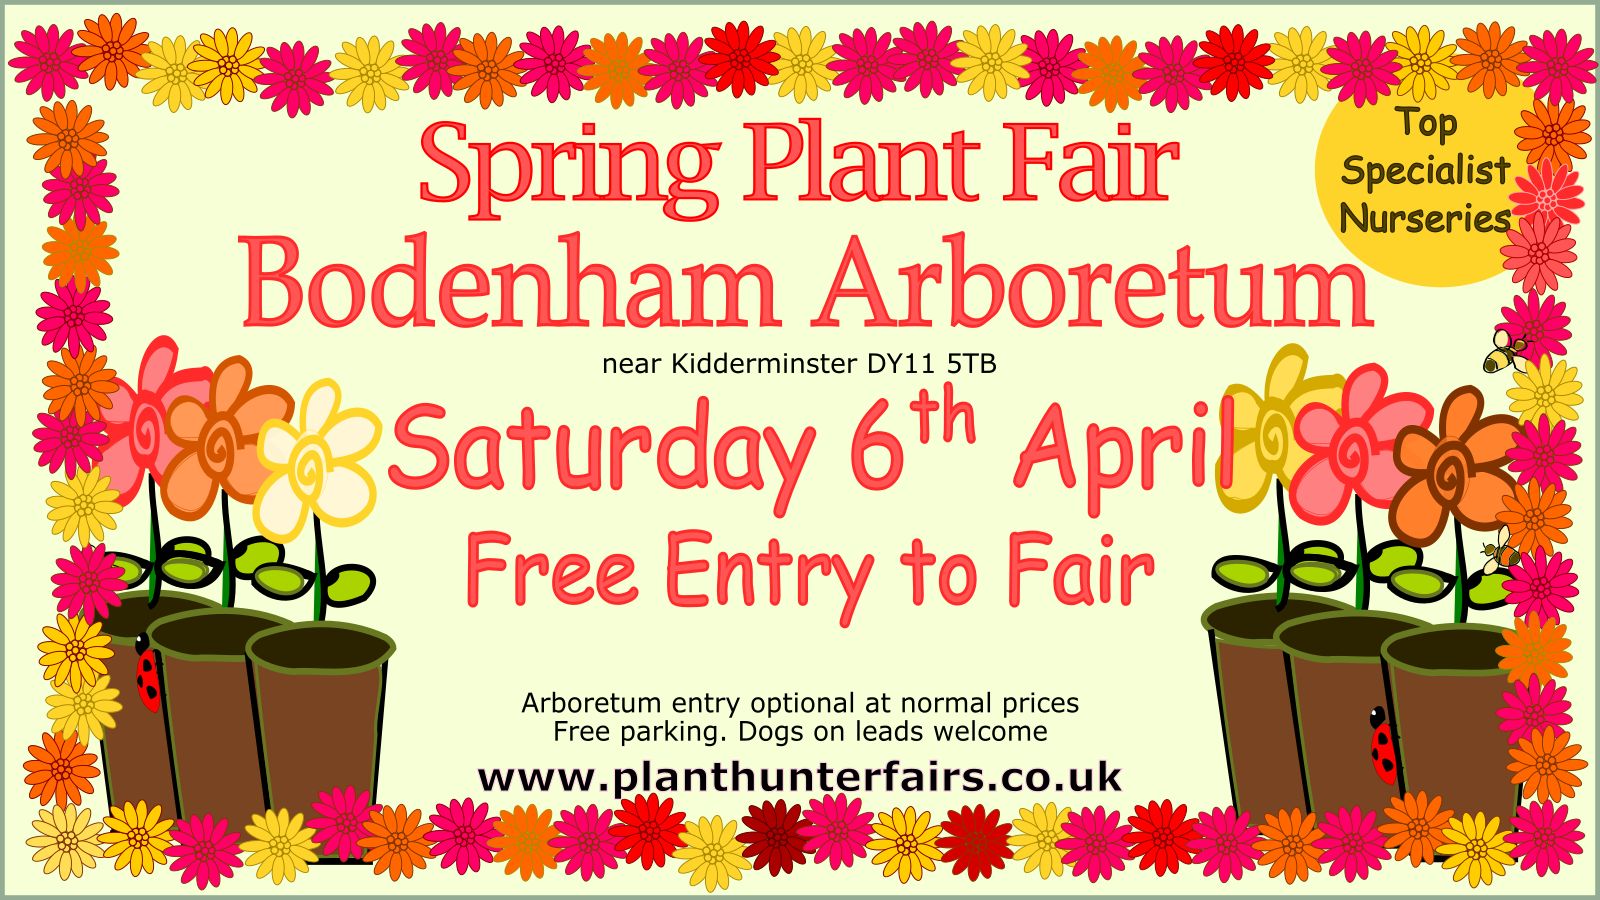 Spring Plant Hunters Fair at Bodenham Arboretum on Saturday 6th April, Kidderminster, England, United Kingdom